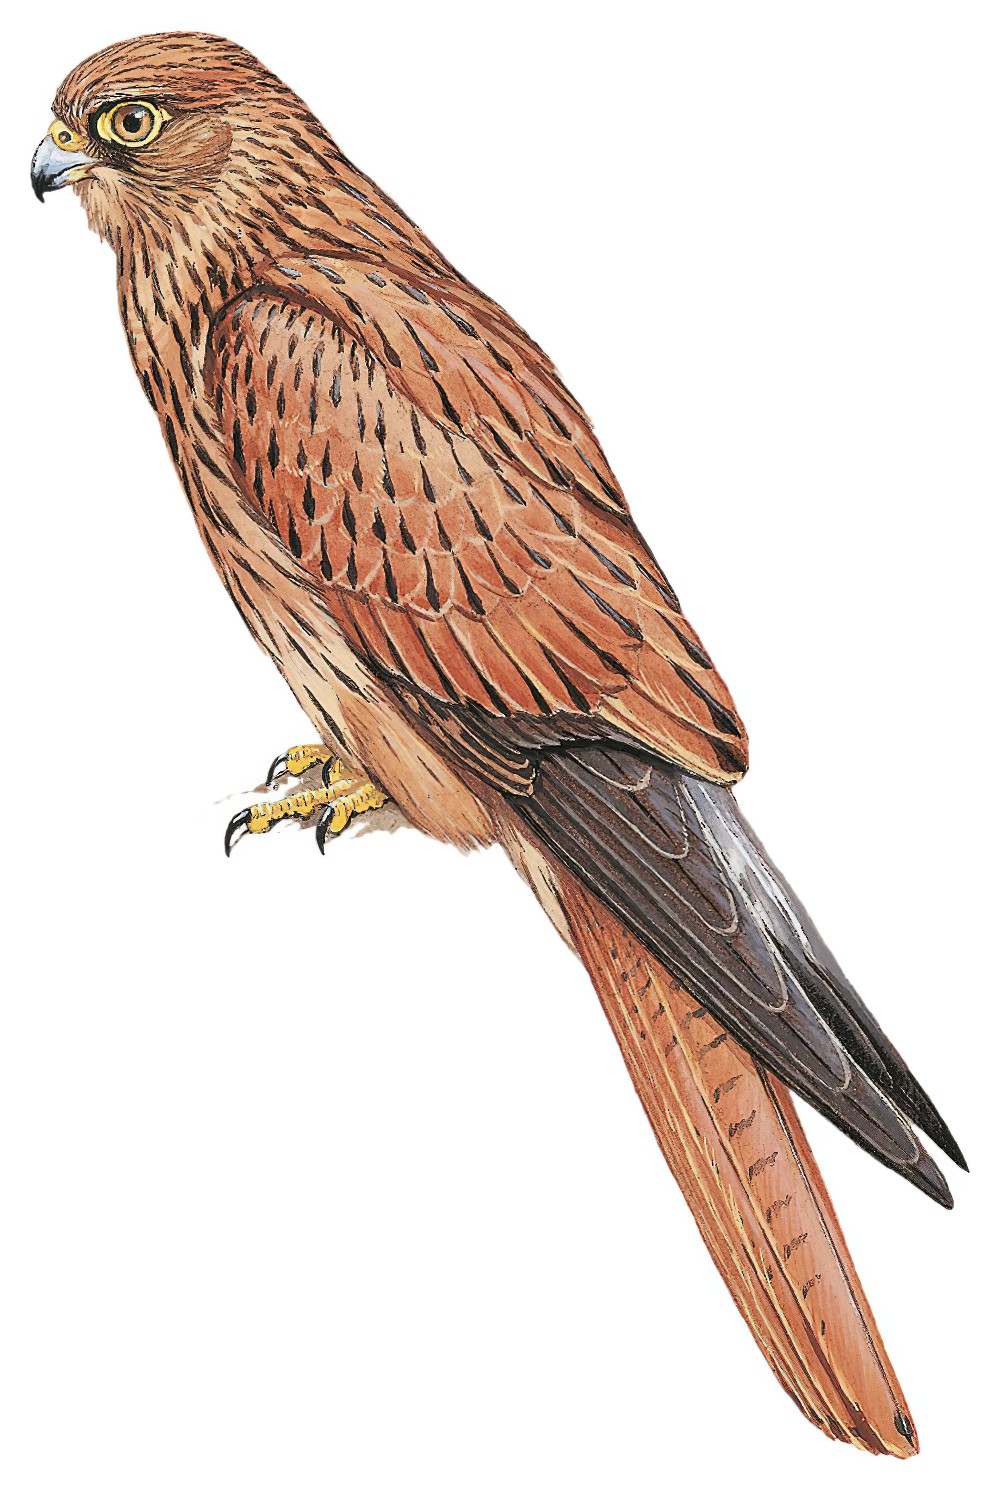 Fox Kestrel / Falco alopex